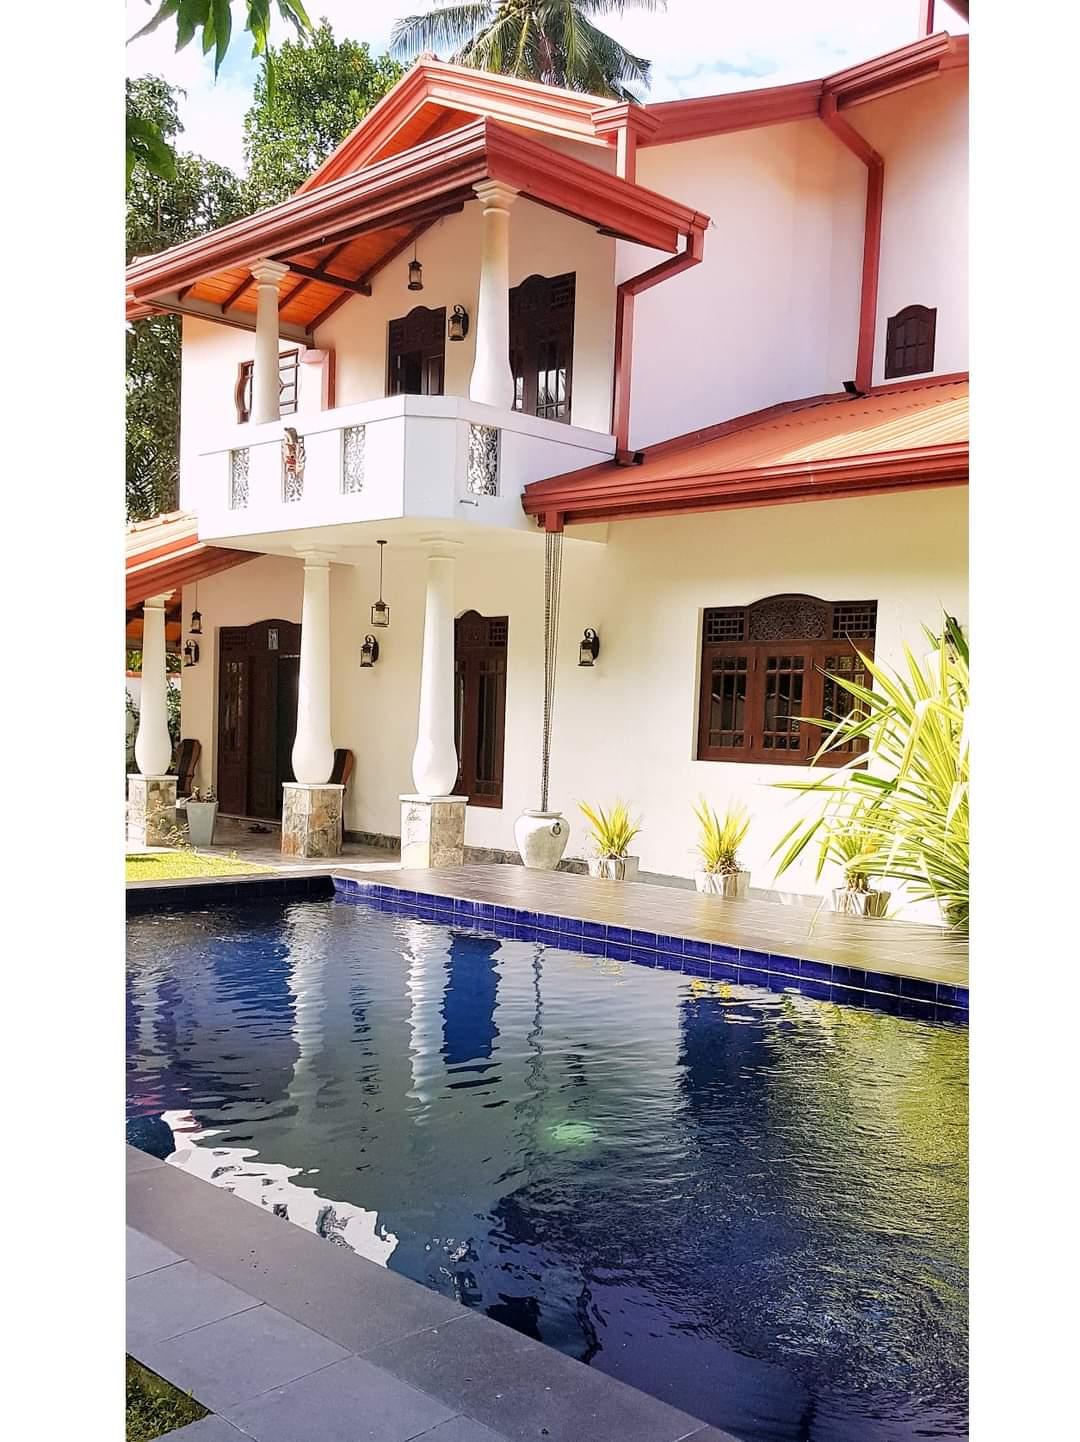 2 BHK Villa for Rent Ahangama - 265000 LKR per Month